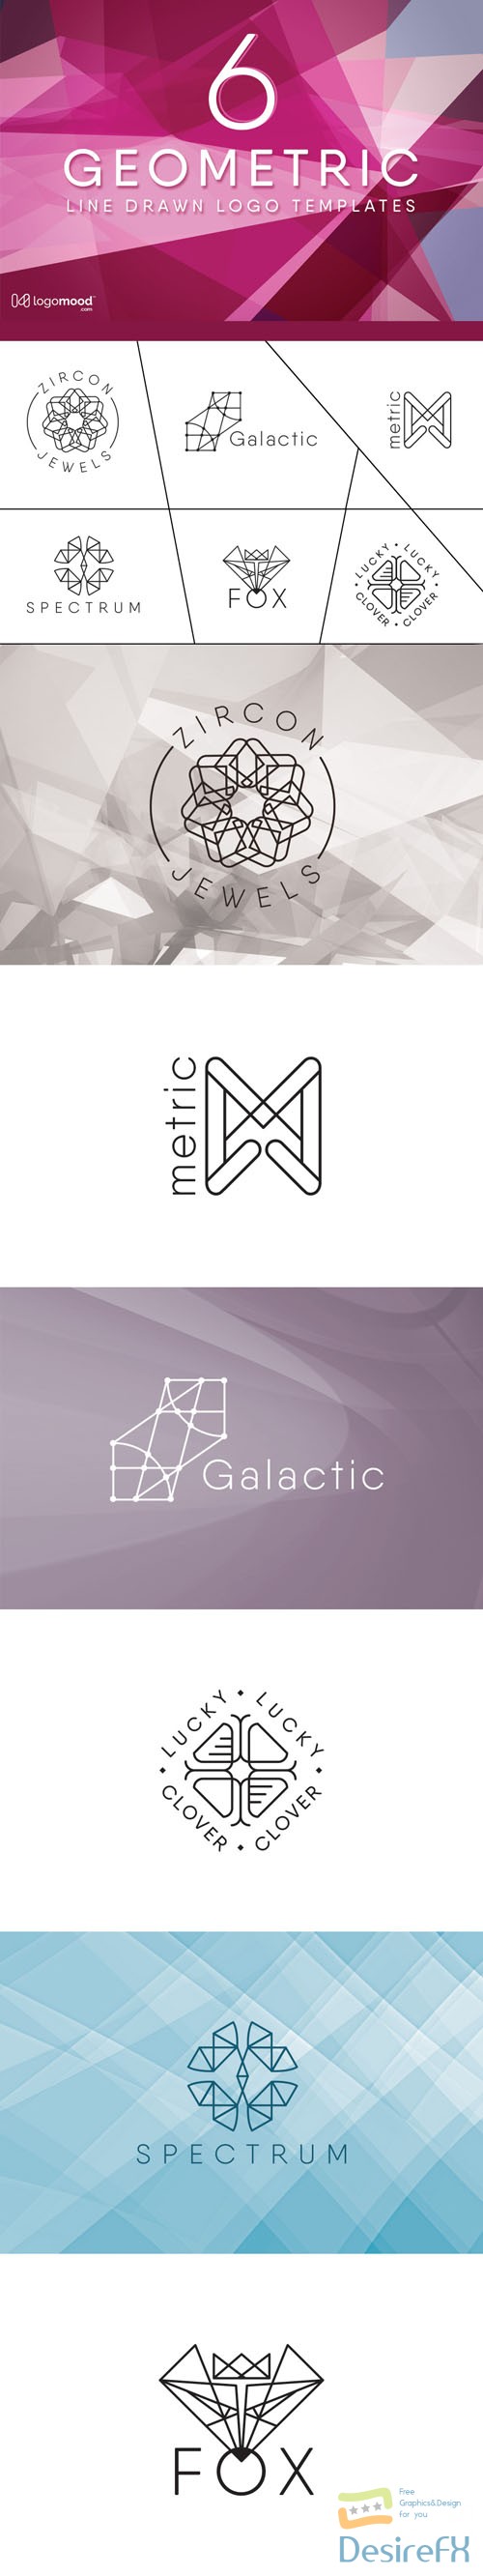 6 Geometric Line Drawn Logo Templates in Vector